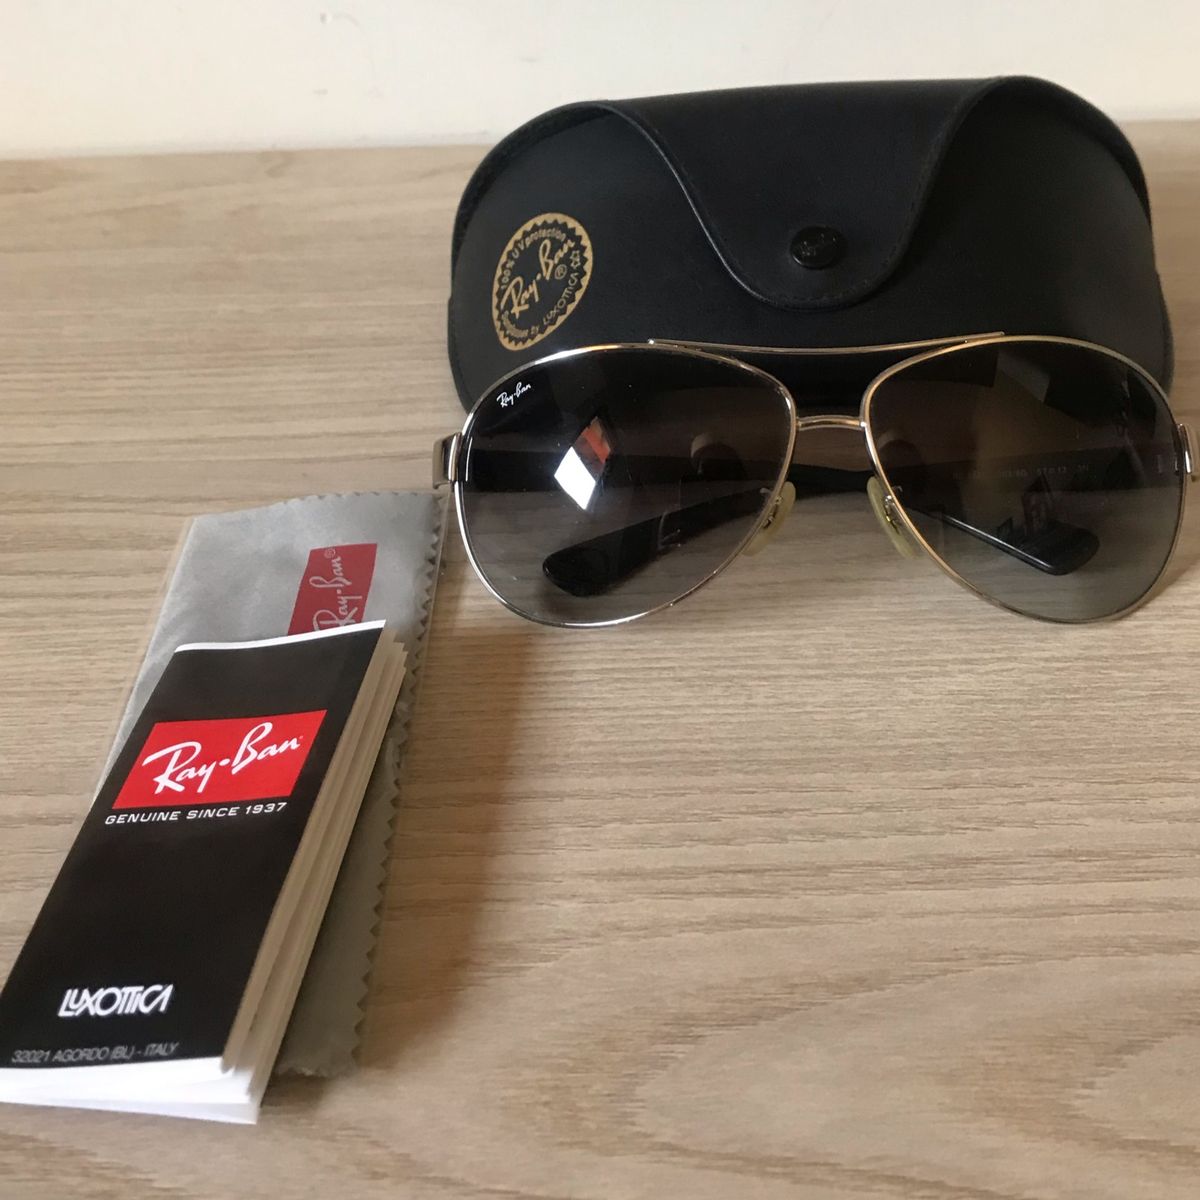 ray ban sunglasses 32021 agordo bl italy